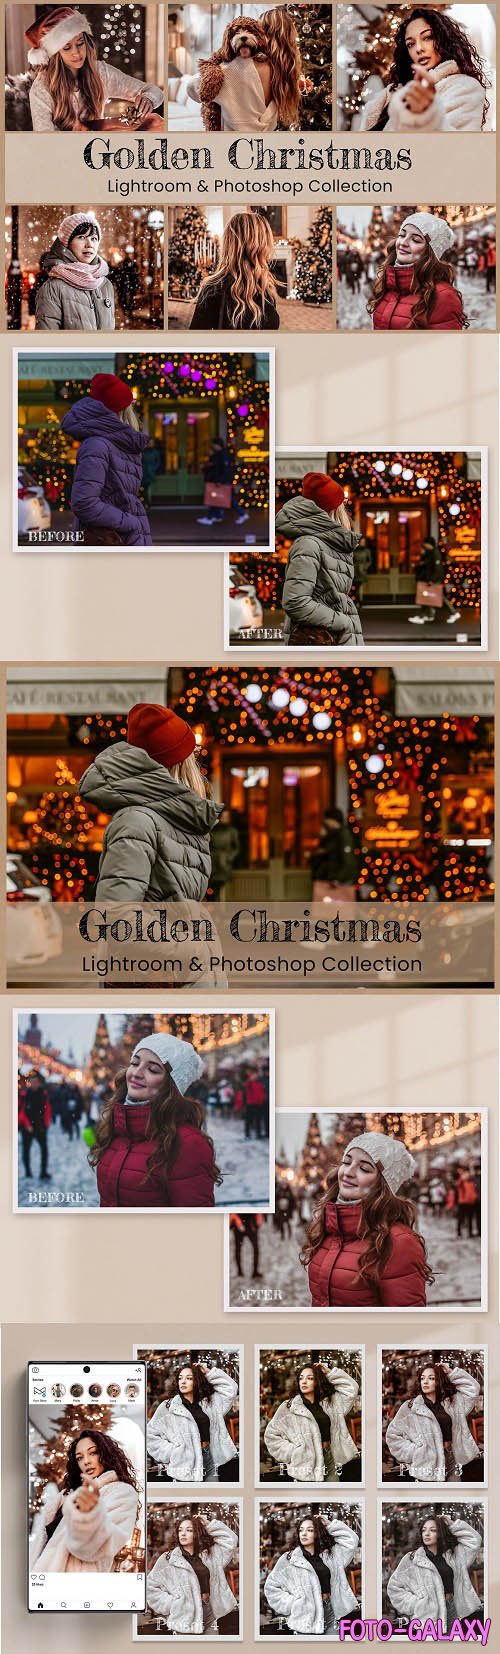 Golden Christmas Lightroom Photoshop - 6570666